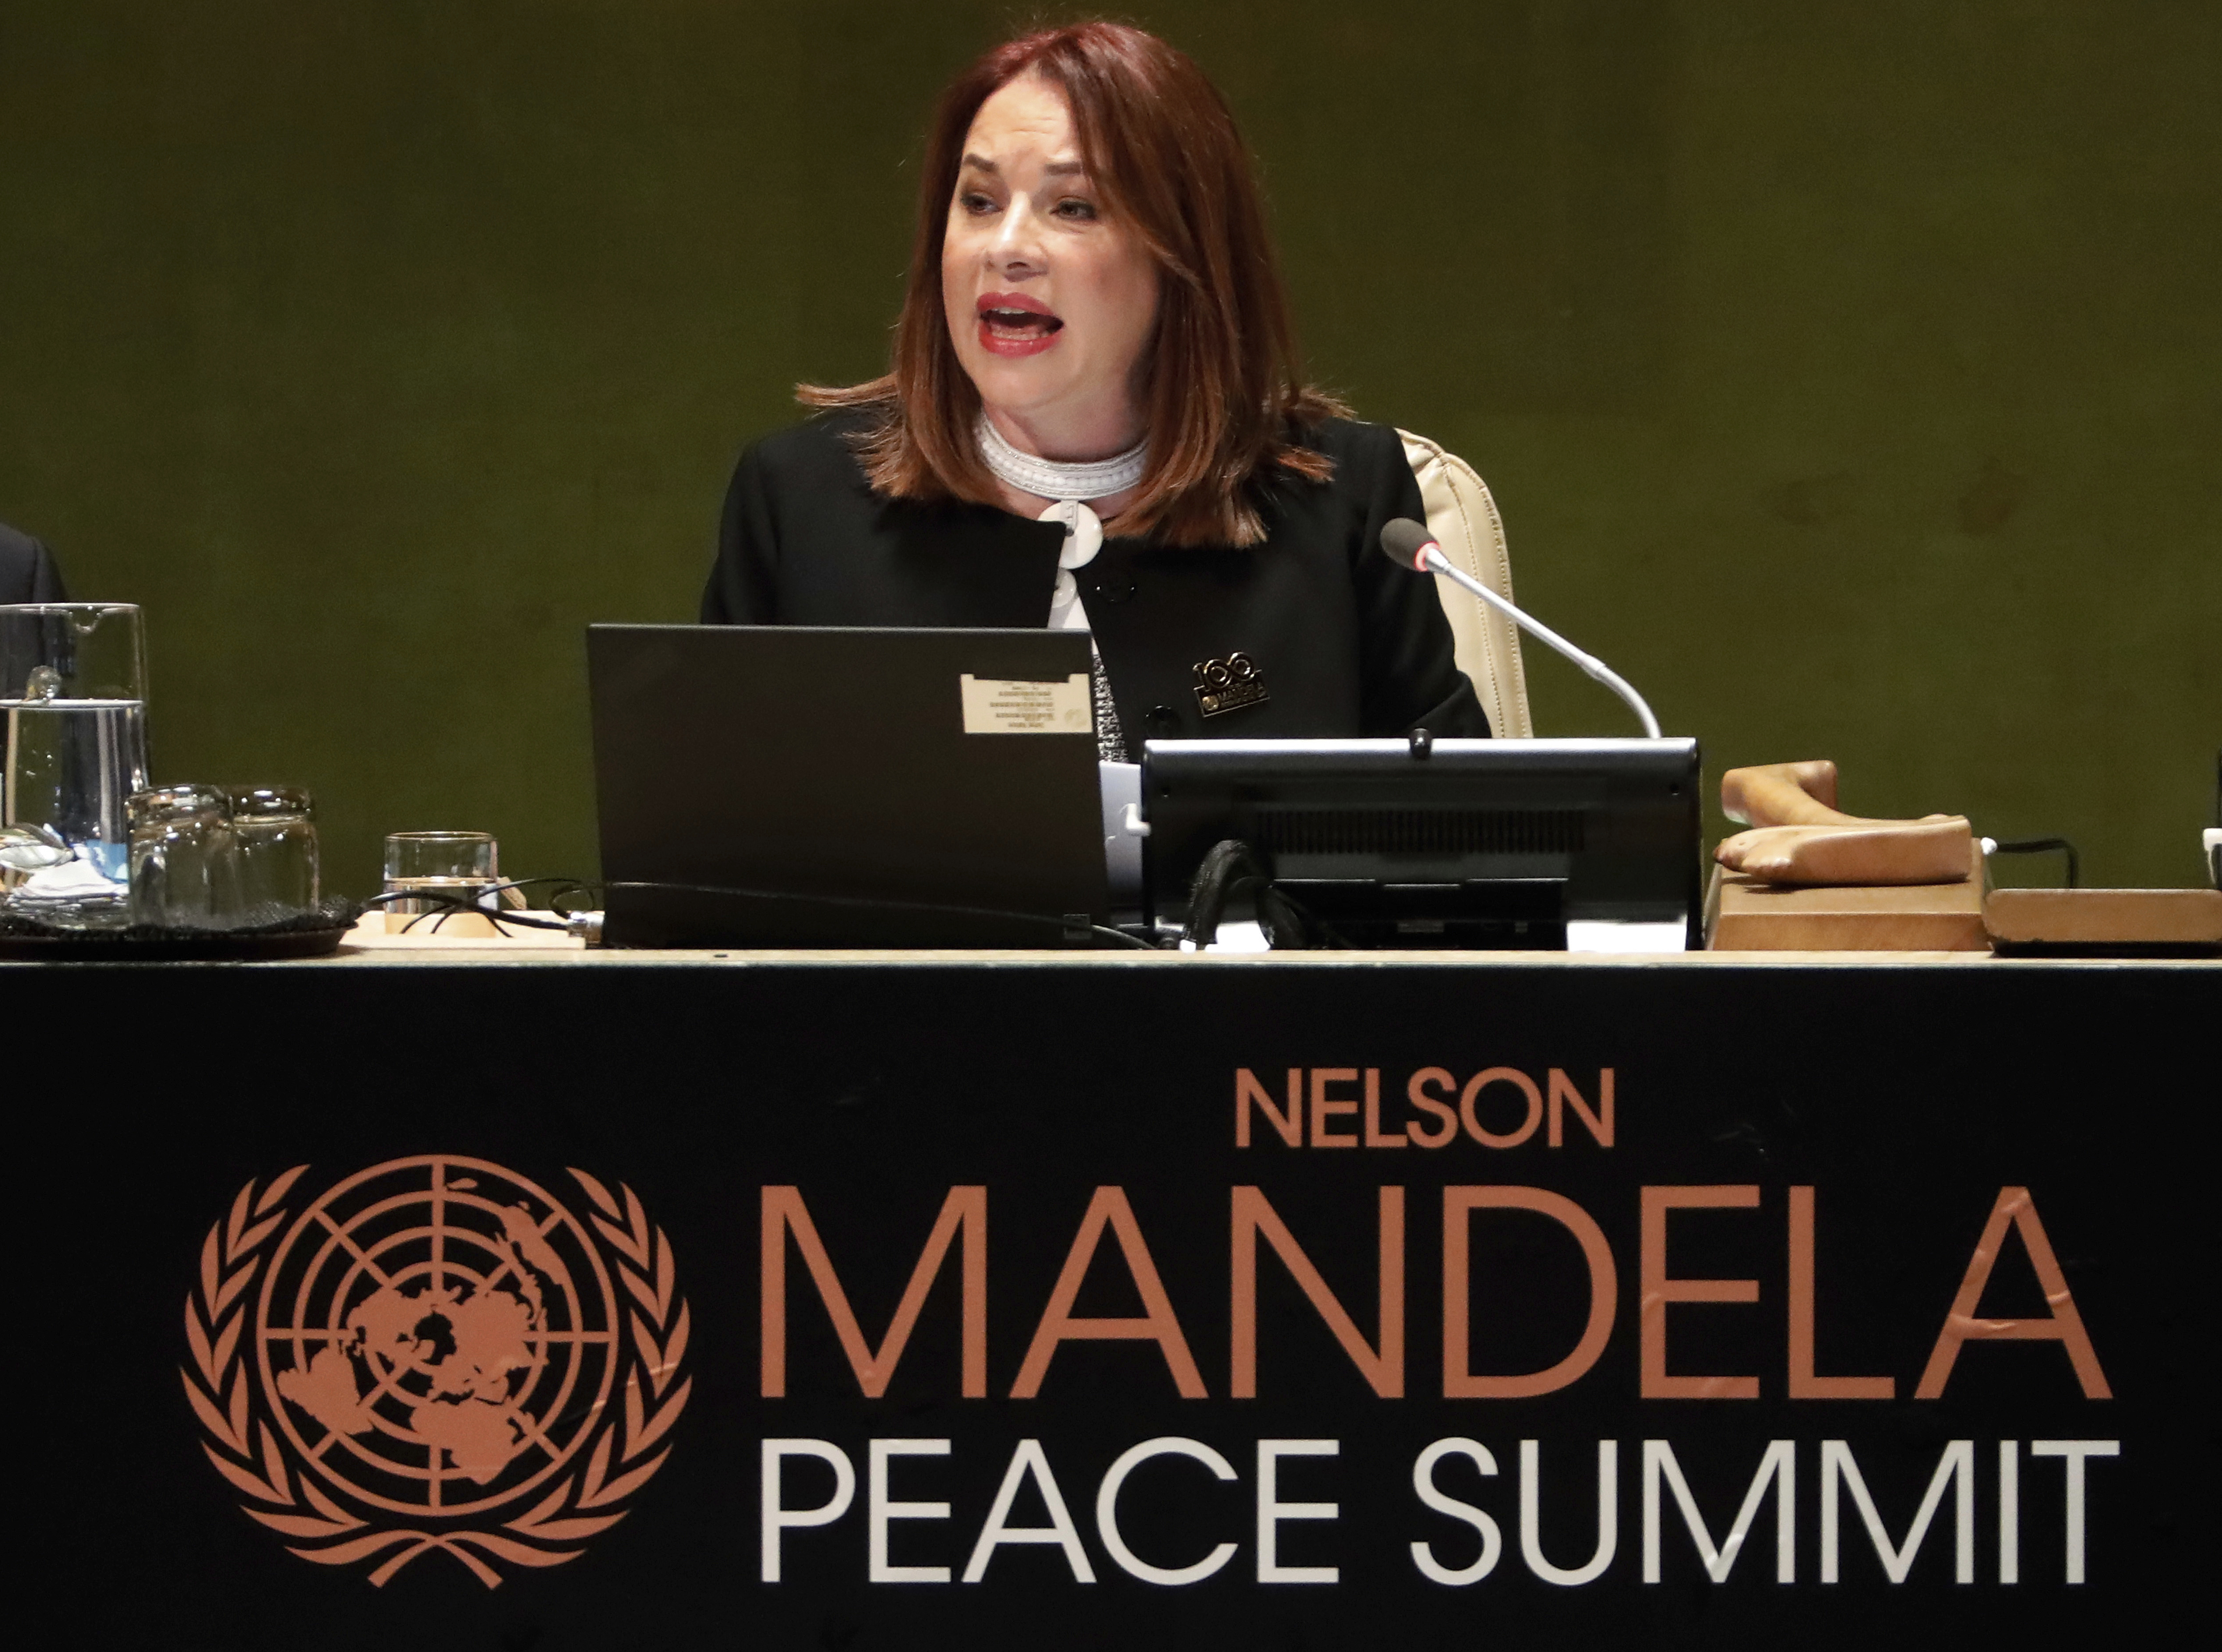 UN General Assembly president Maria Fernanda Espinosa addresses the Nelson Mandela Peace Summit